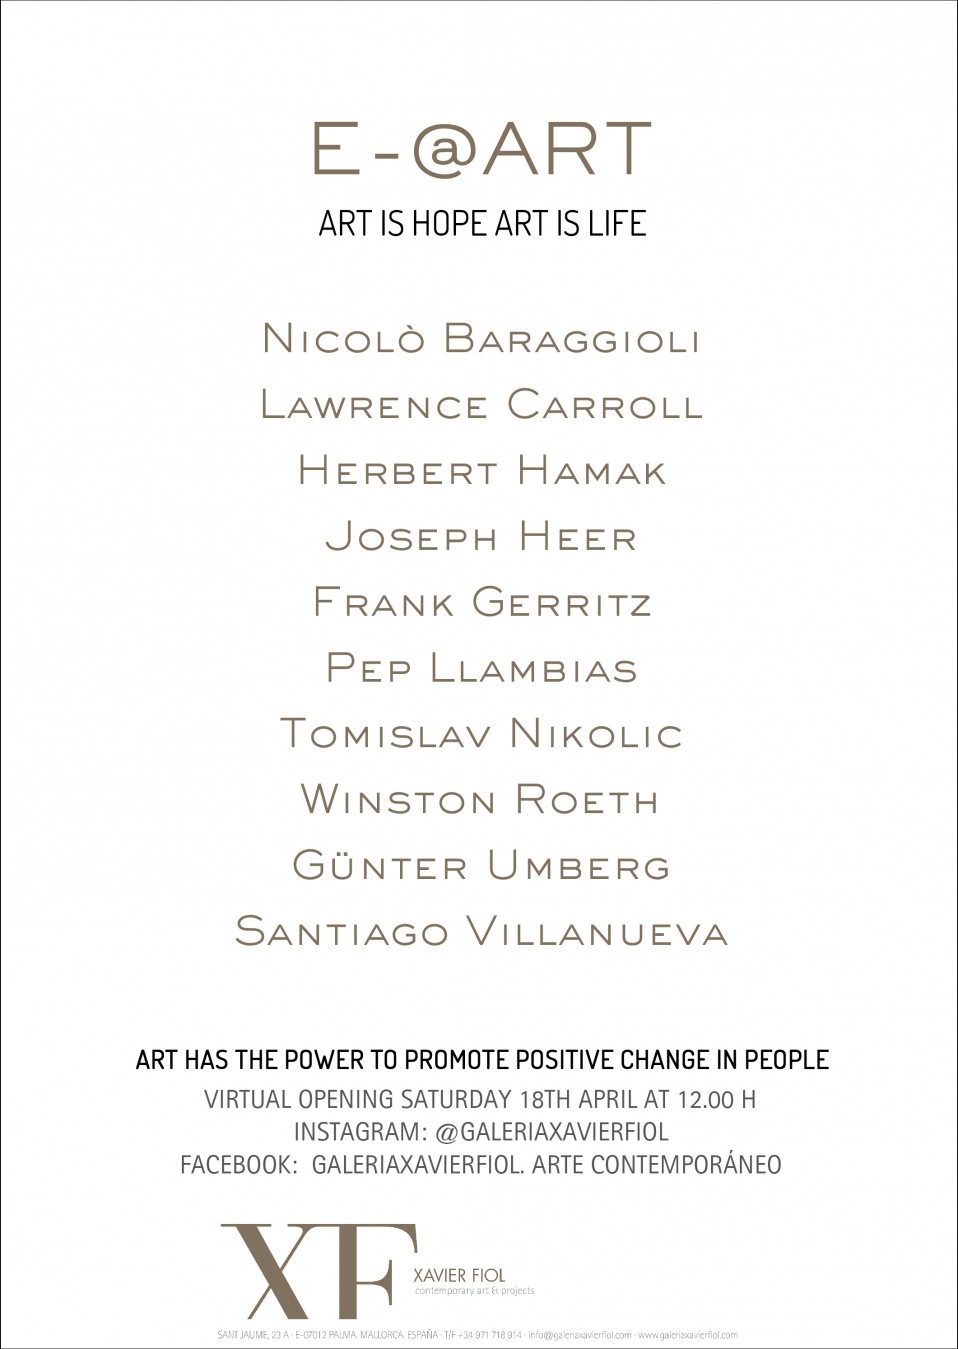 Próxima exposición: «E-@ART» «ART IS HOPE ART IS LIFE» VIRTUAL OPENING SATURDAY 18TH APRIL AT 12:00H INSTAGRAM: @galeriaxavierfiol FACEBOOK: Galeriaxavierfiol. Arte contemporáneo